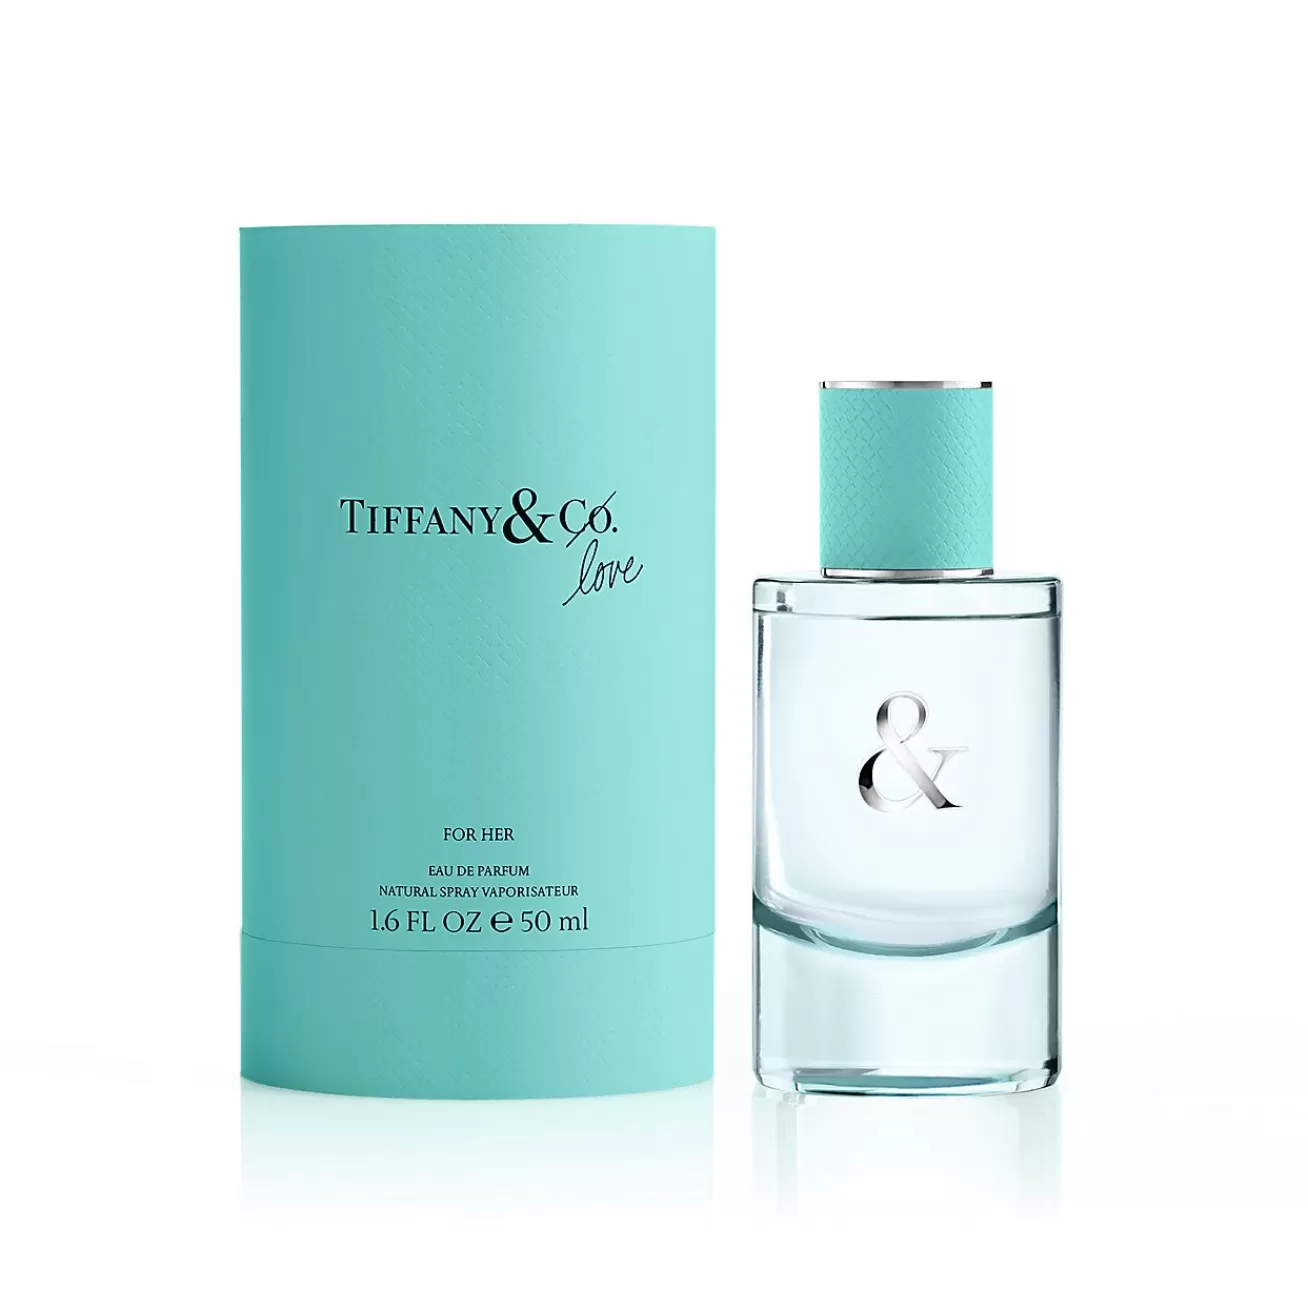 Tiffany & Co. Tiffany & Love Eau de Parfum for Her, 1.6 ounces. | ^ Tiffany & Love